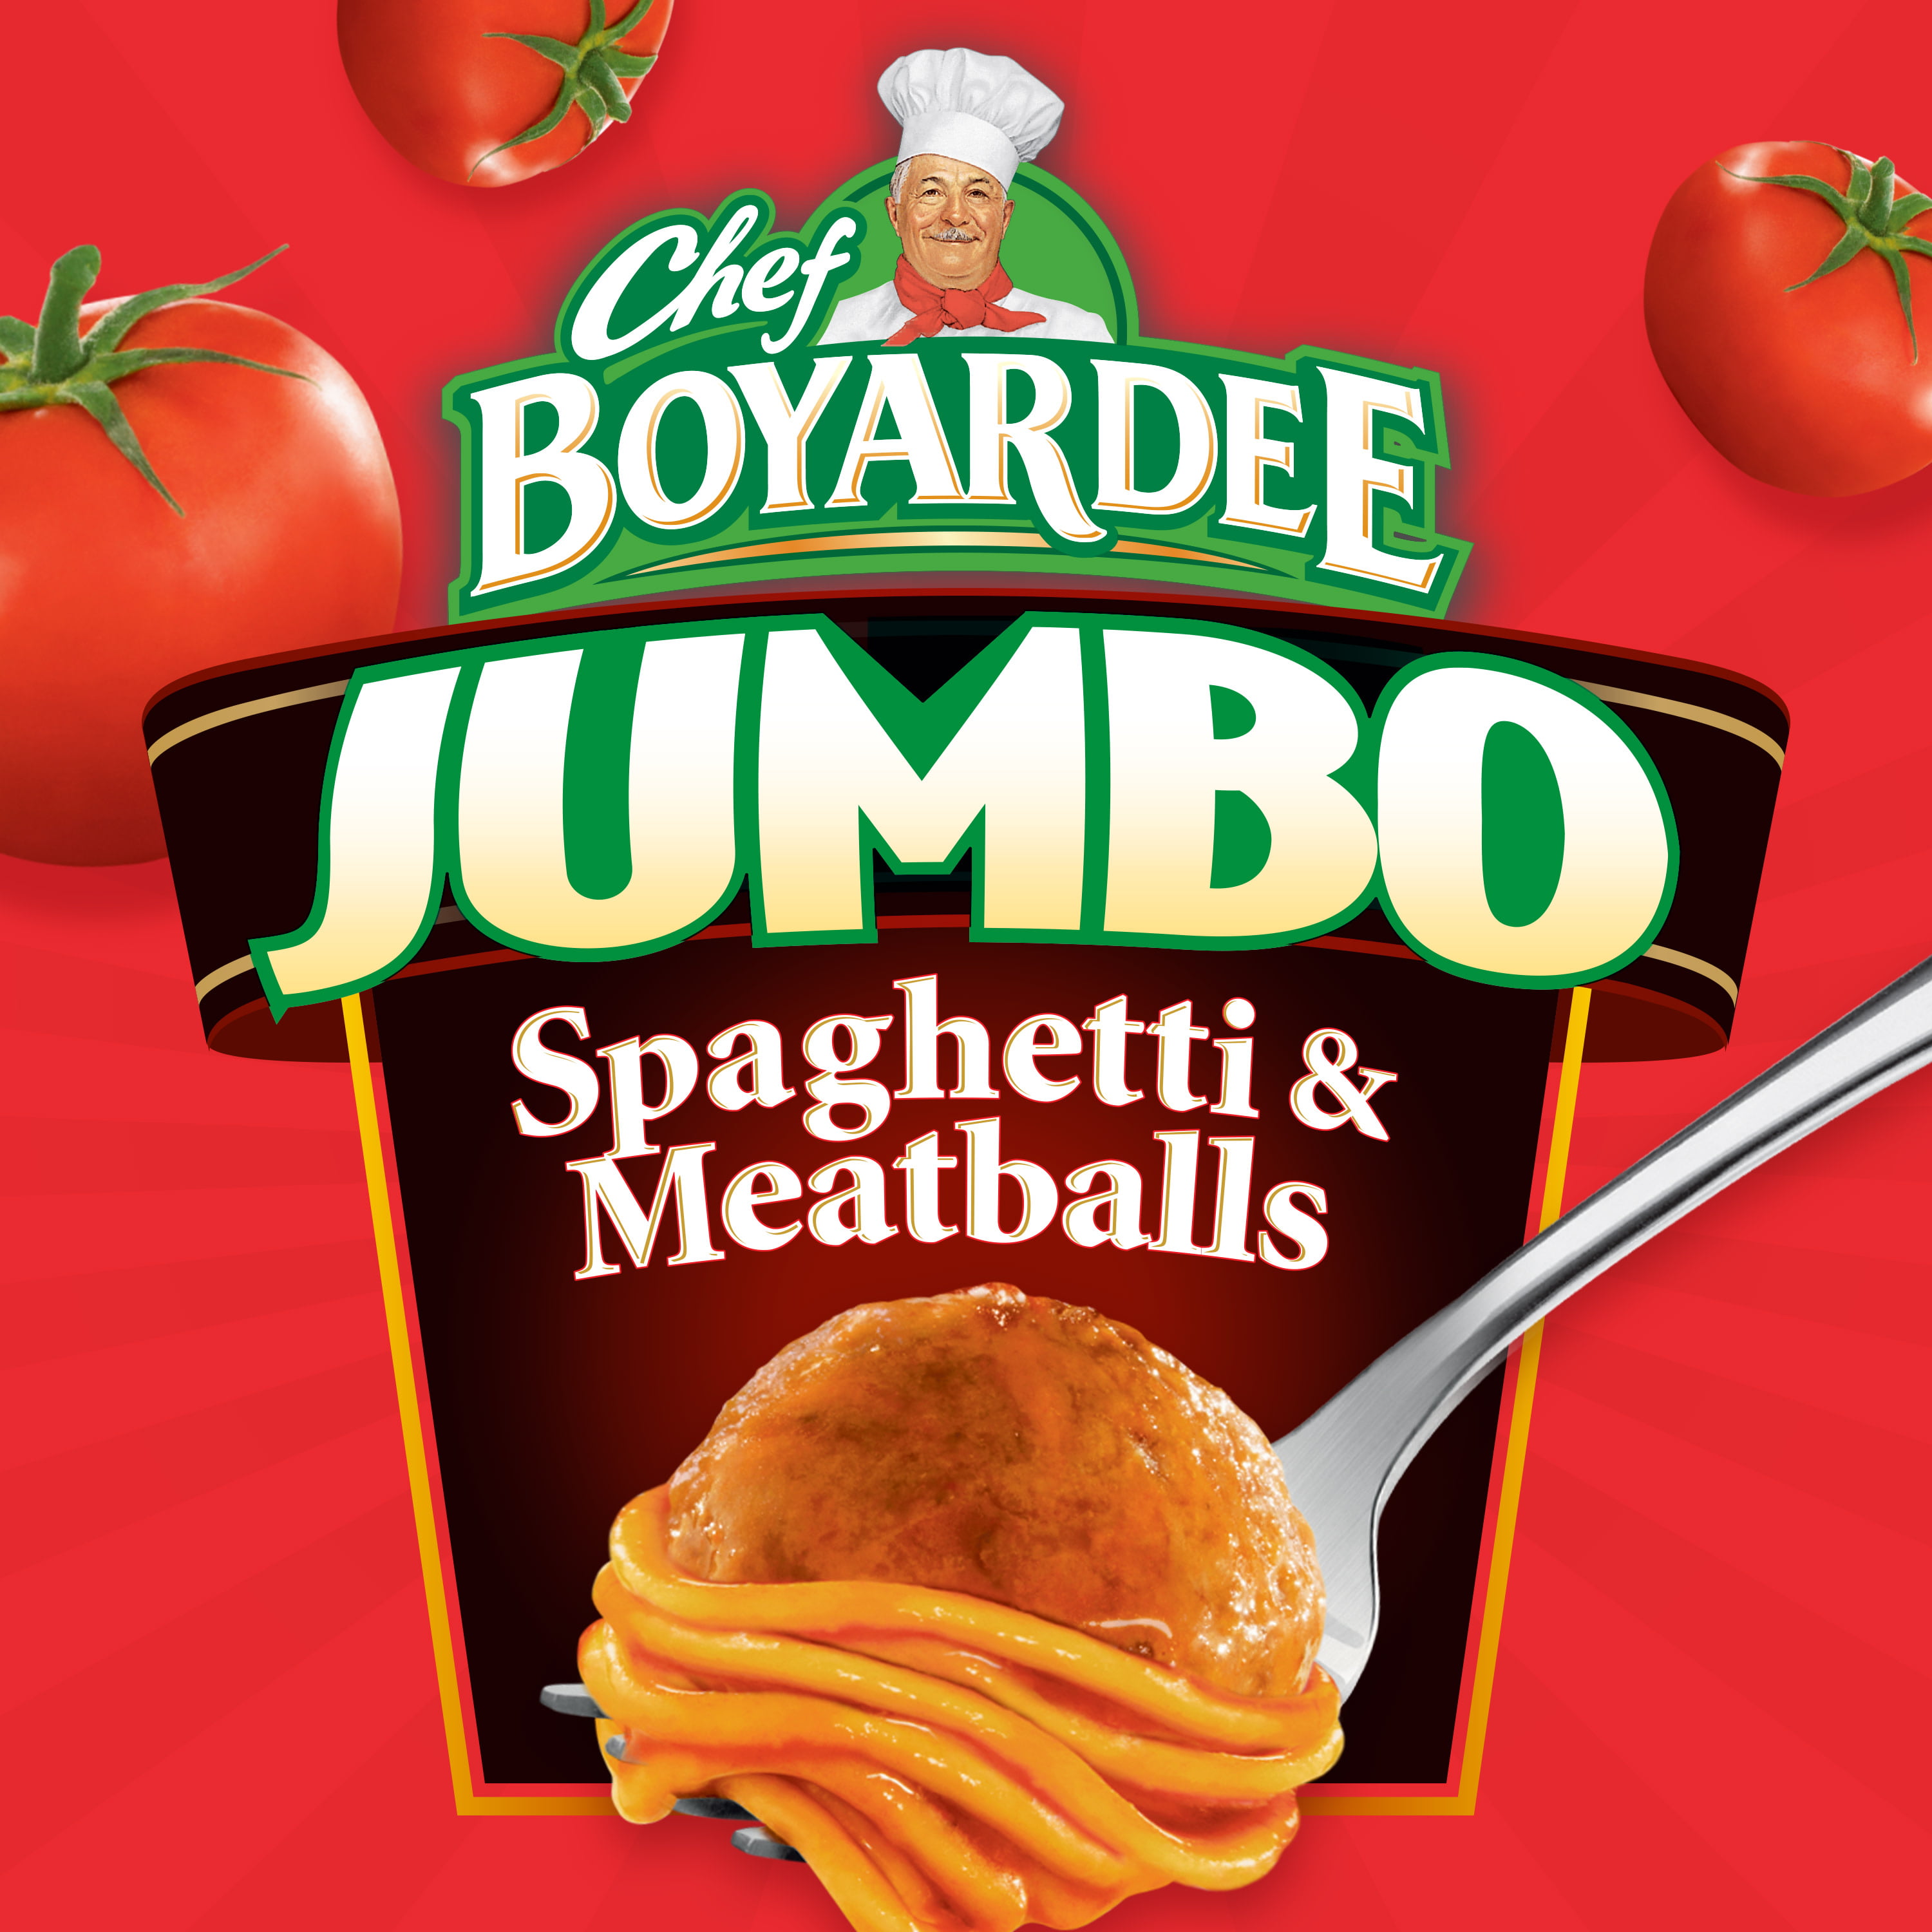 Chef Boyardee Jumbo Spaghetti And Meatballs Microwave Pasta 14 5 Oz Walmart Com Walmart Com